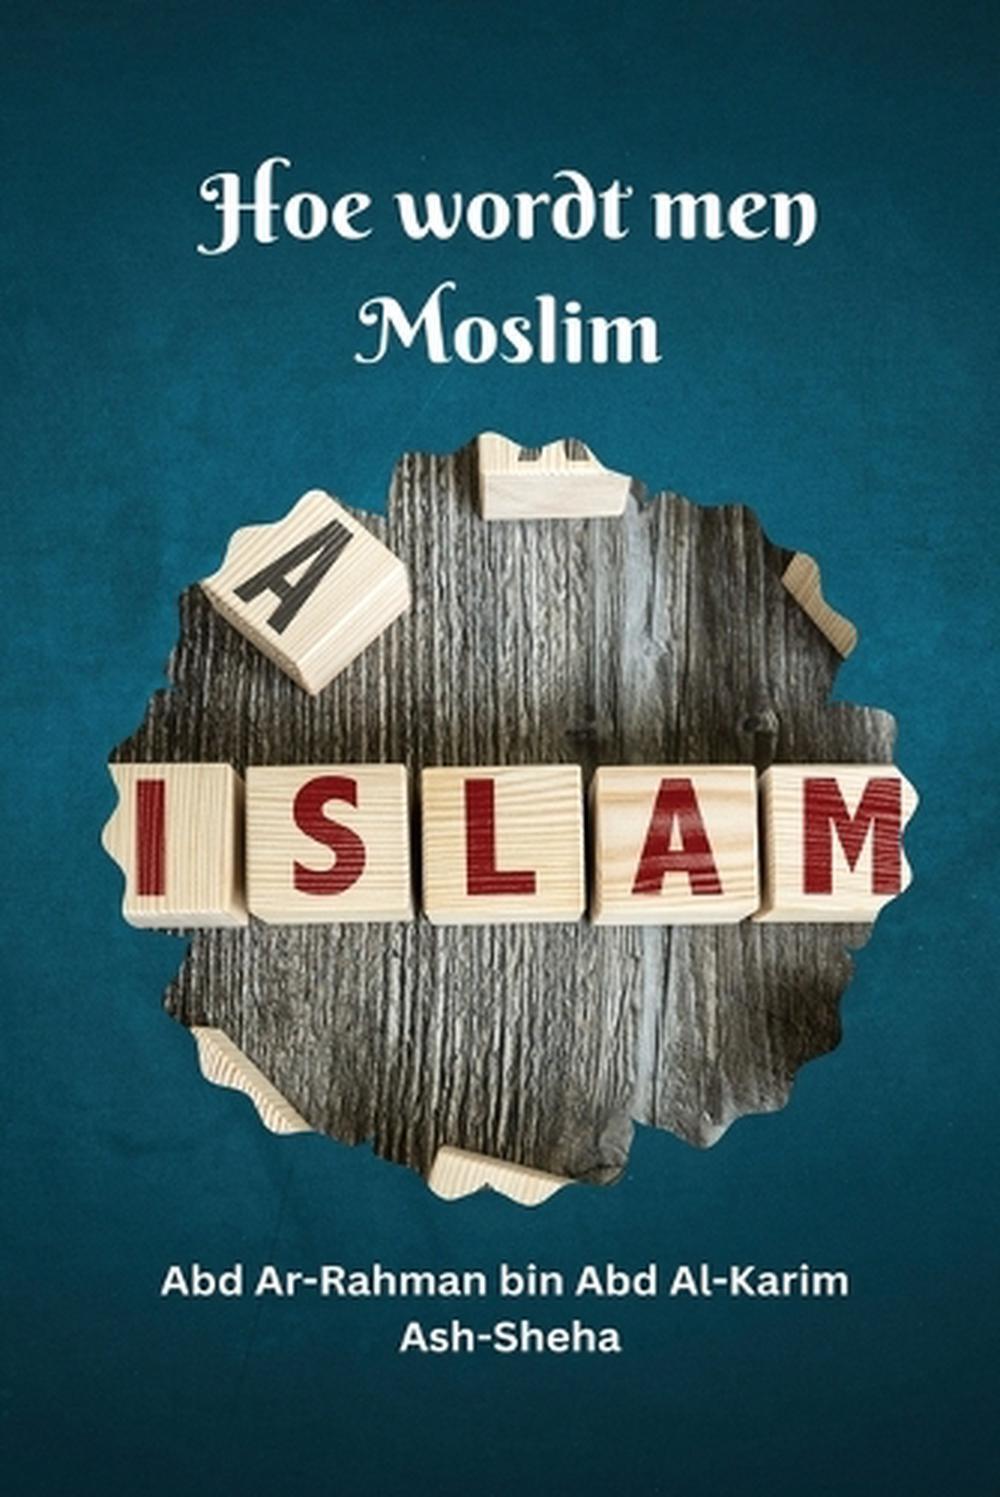 Hoe wordt men Moslim by Abd Ar-Rahman Bin Abd Al-Karim Paperback Book